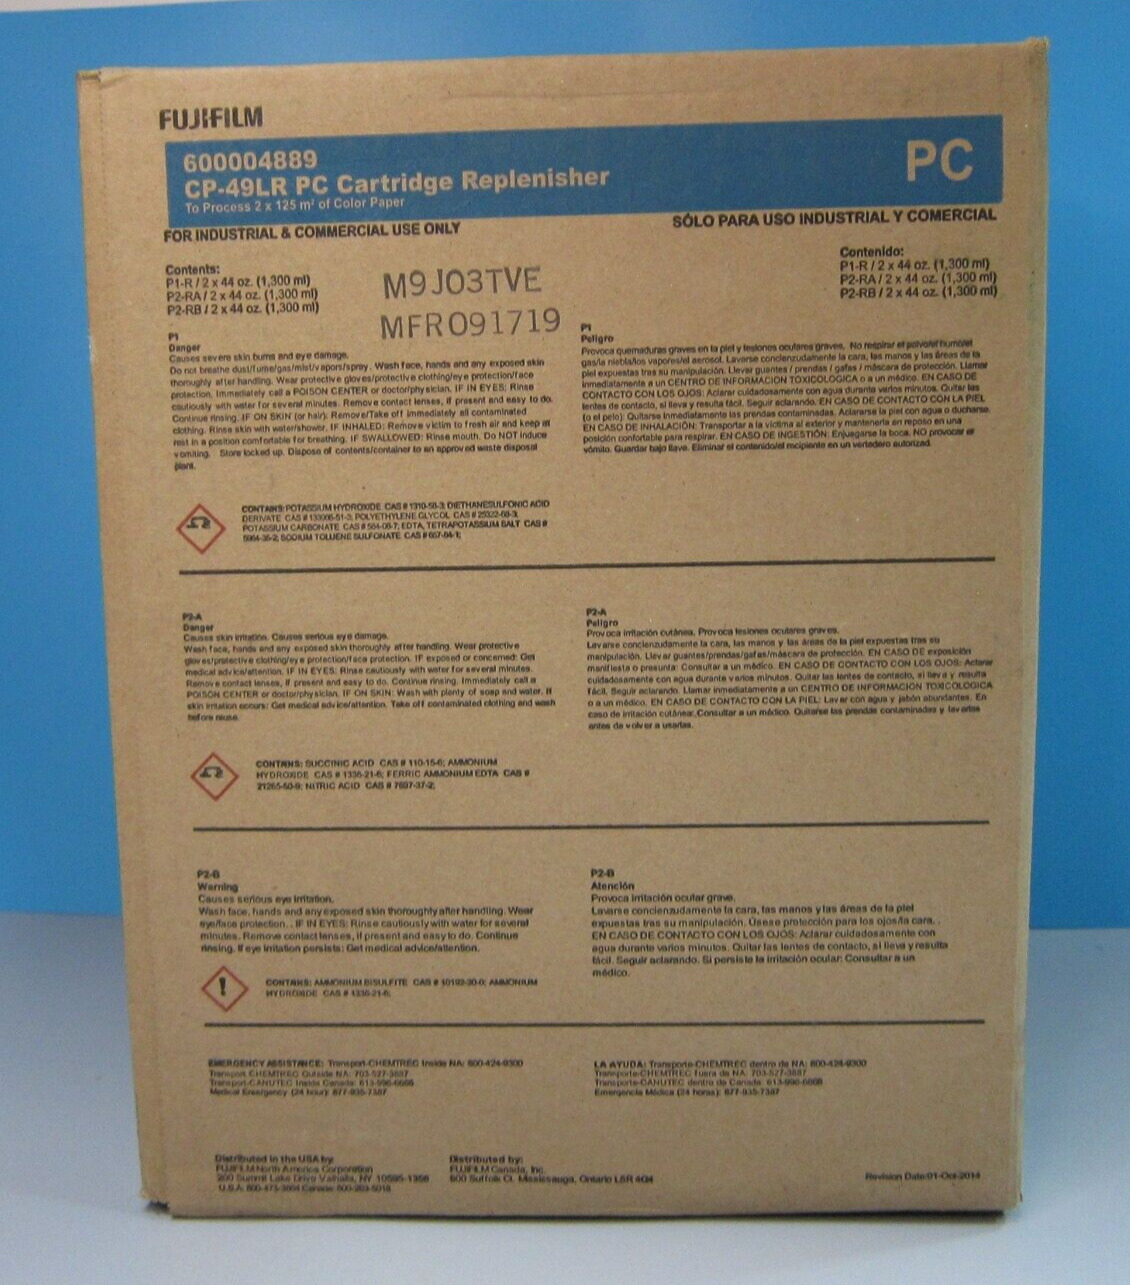 Genuine Fujifilm CP-49LR PC Cartridge Replenisher